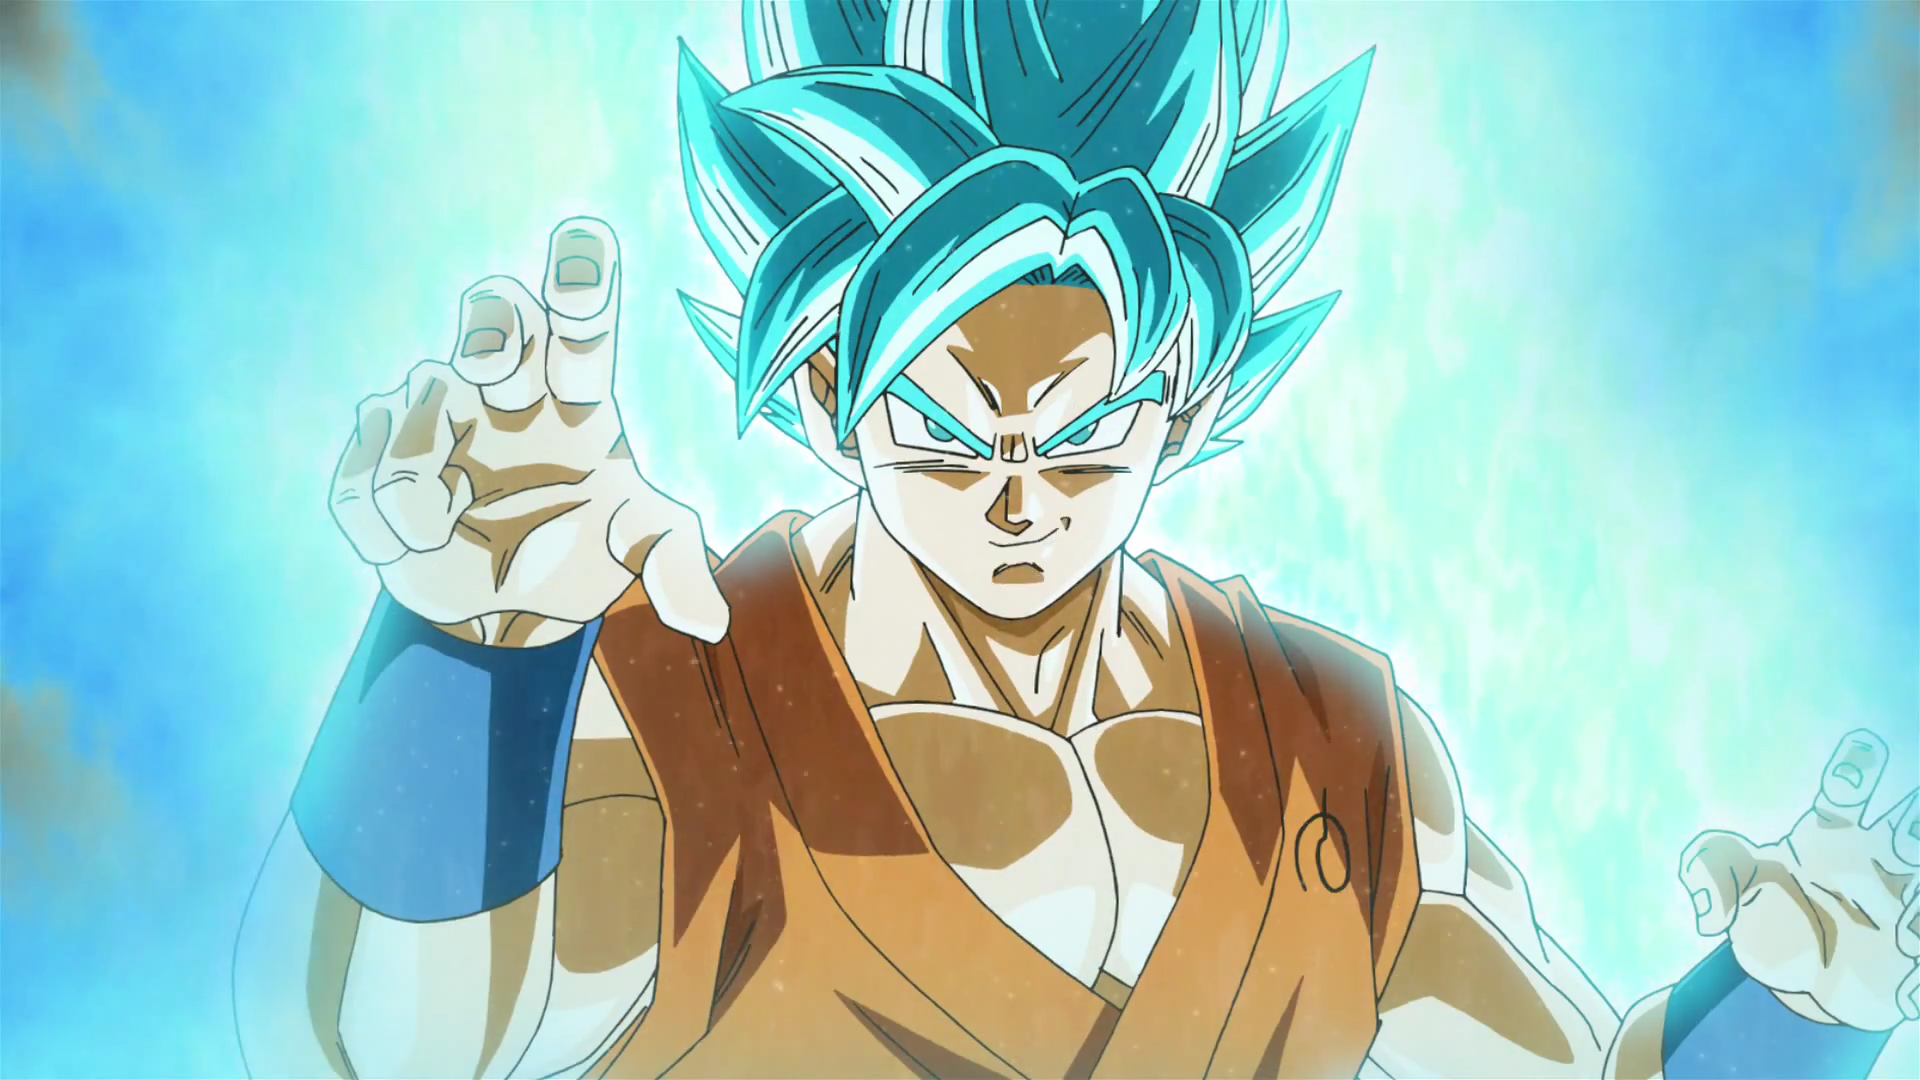 Goku (Super Saiyan Blue) vs. Whis